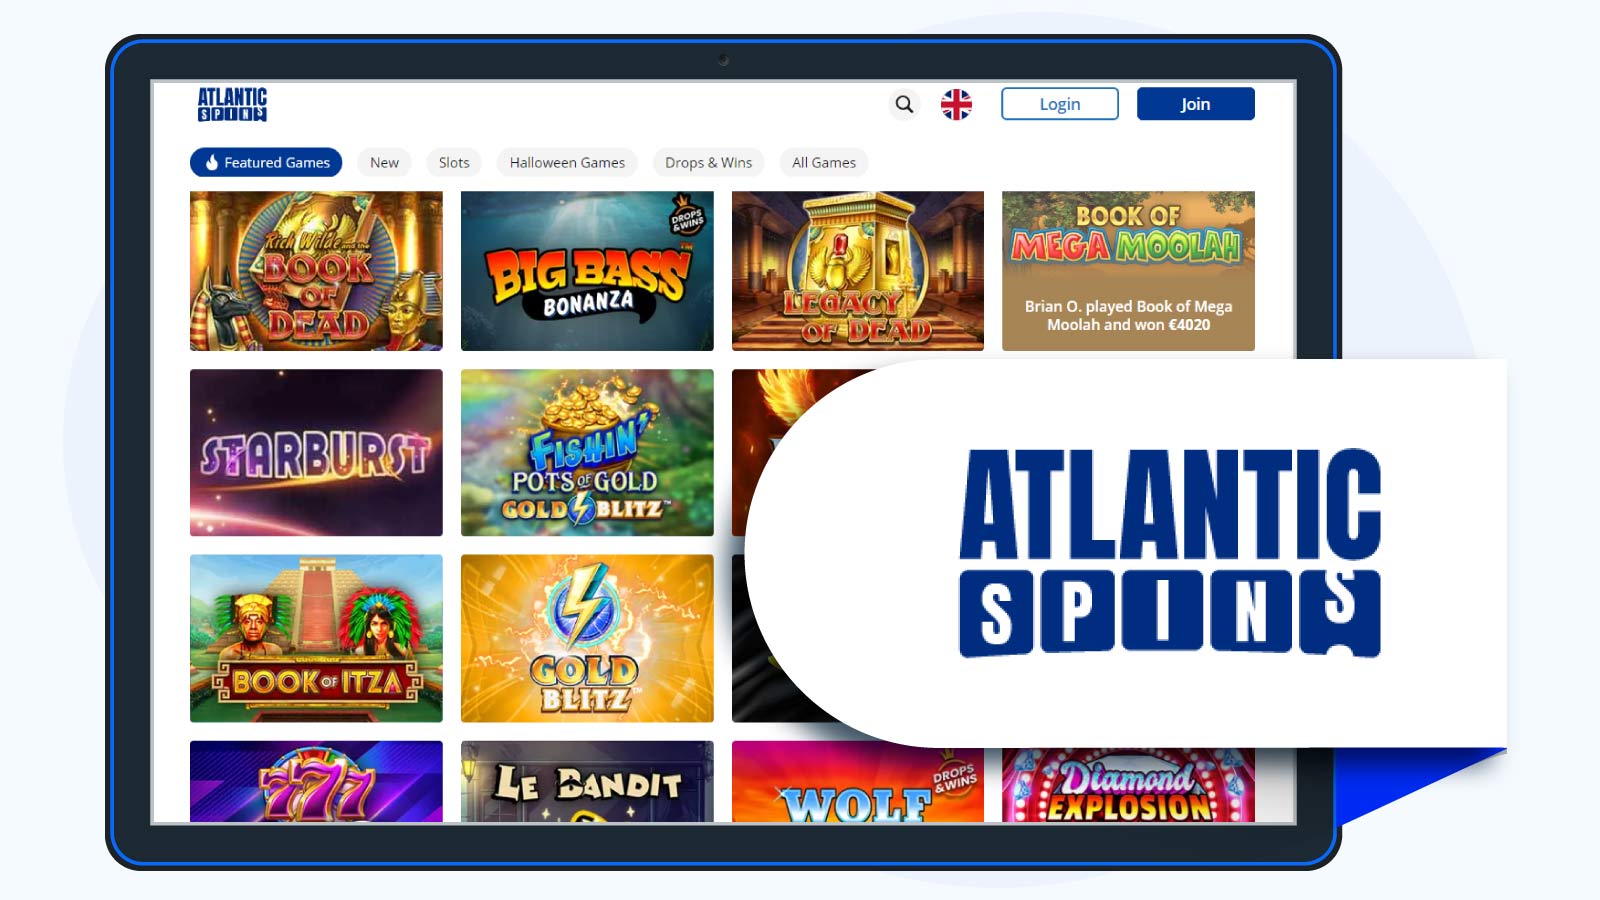 Atlantic Spins Casino Deposit £10 Play With £30 + 30 Spins on Starburst